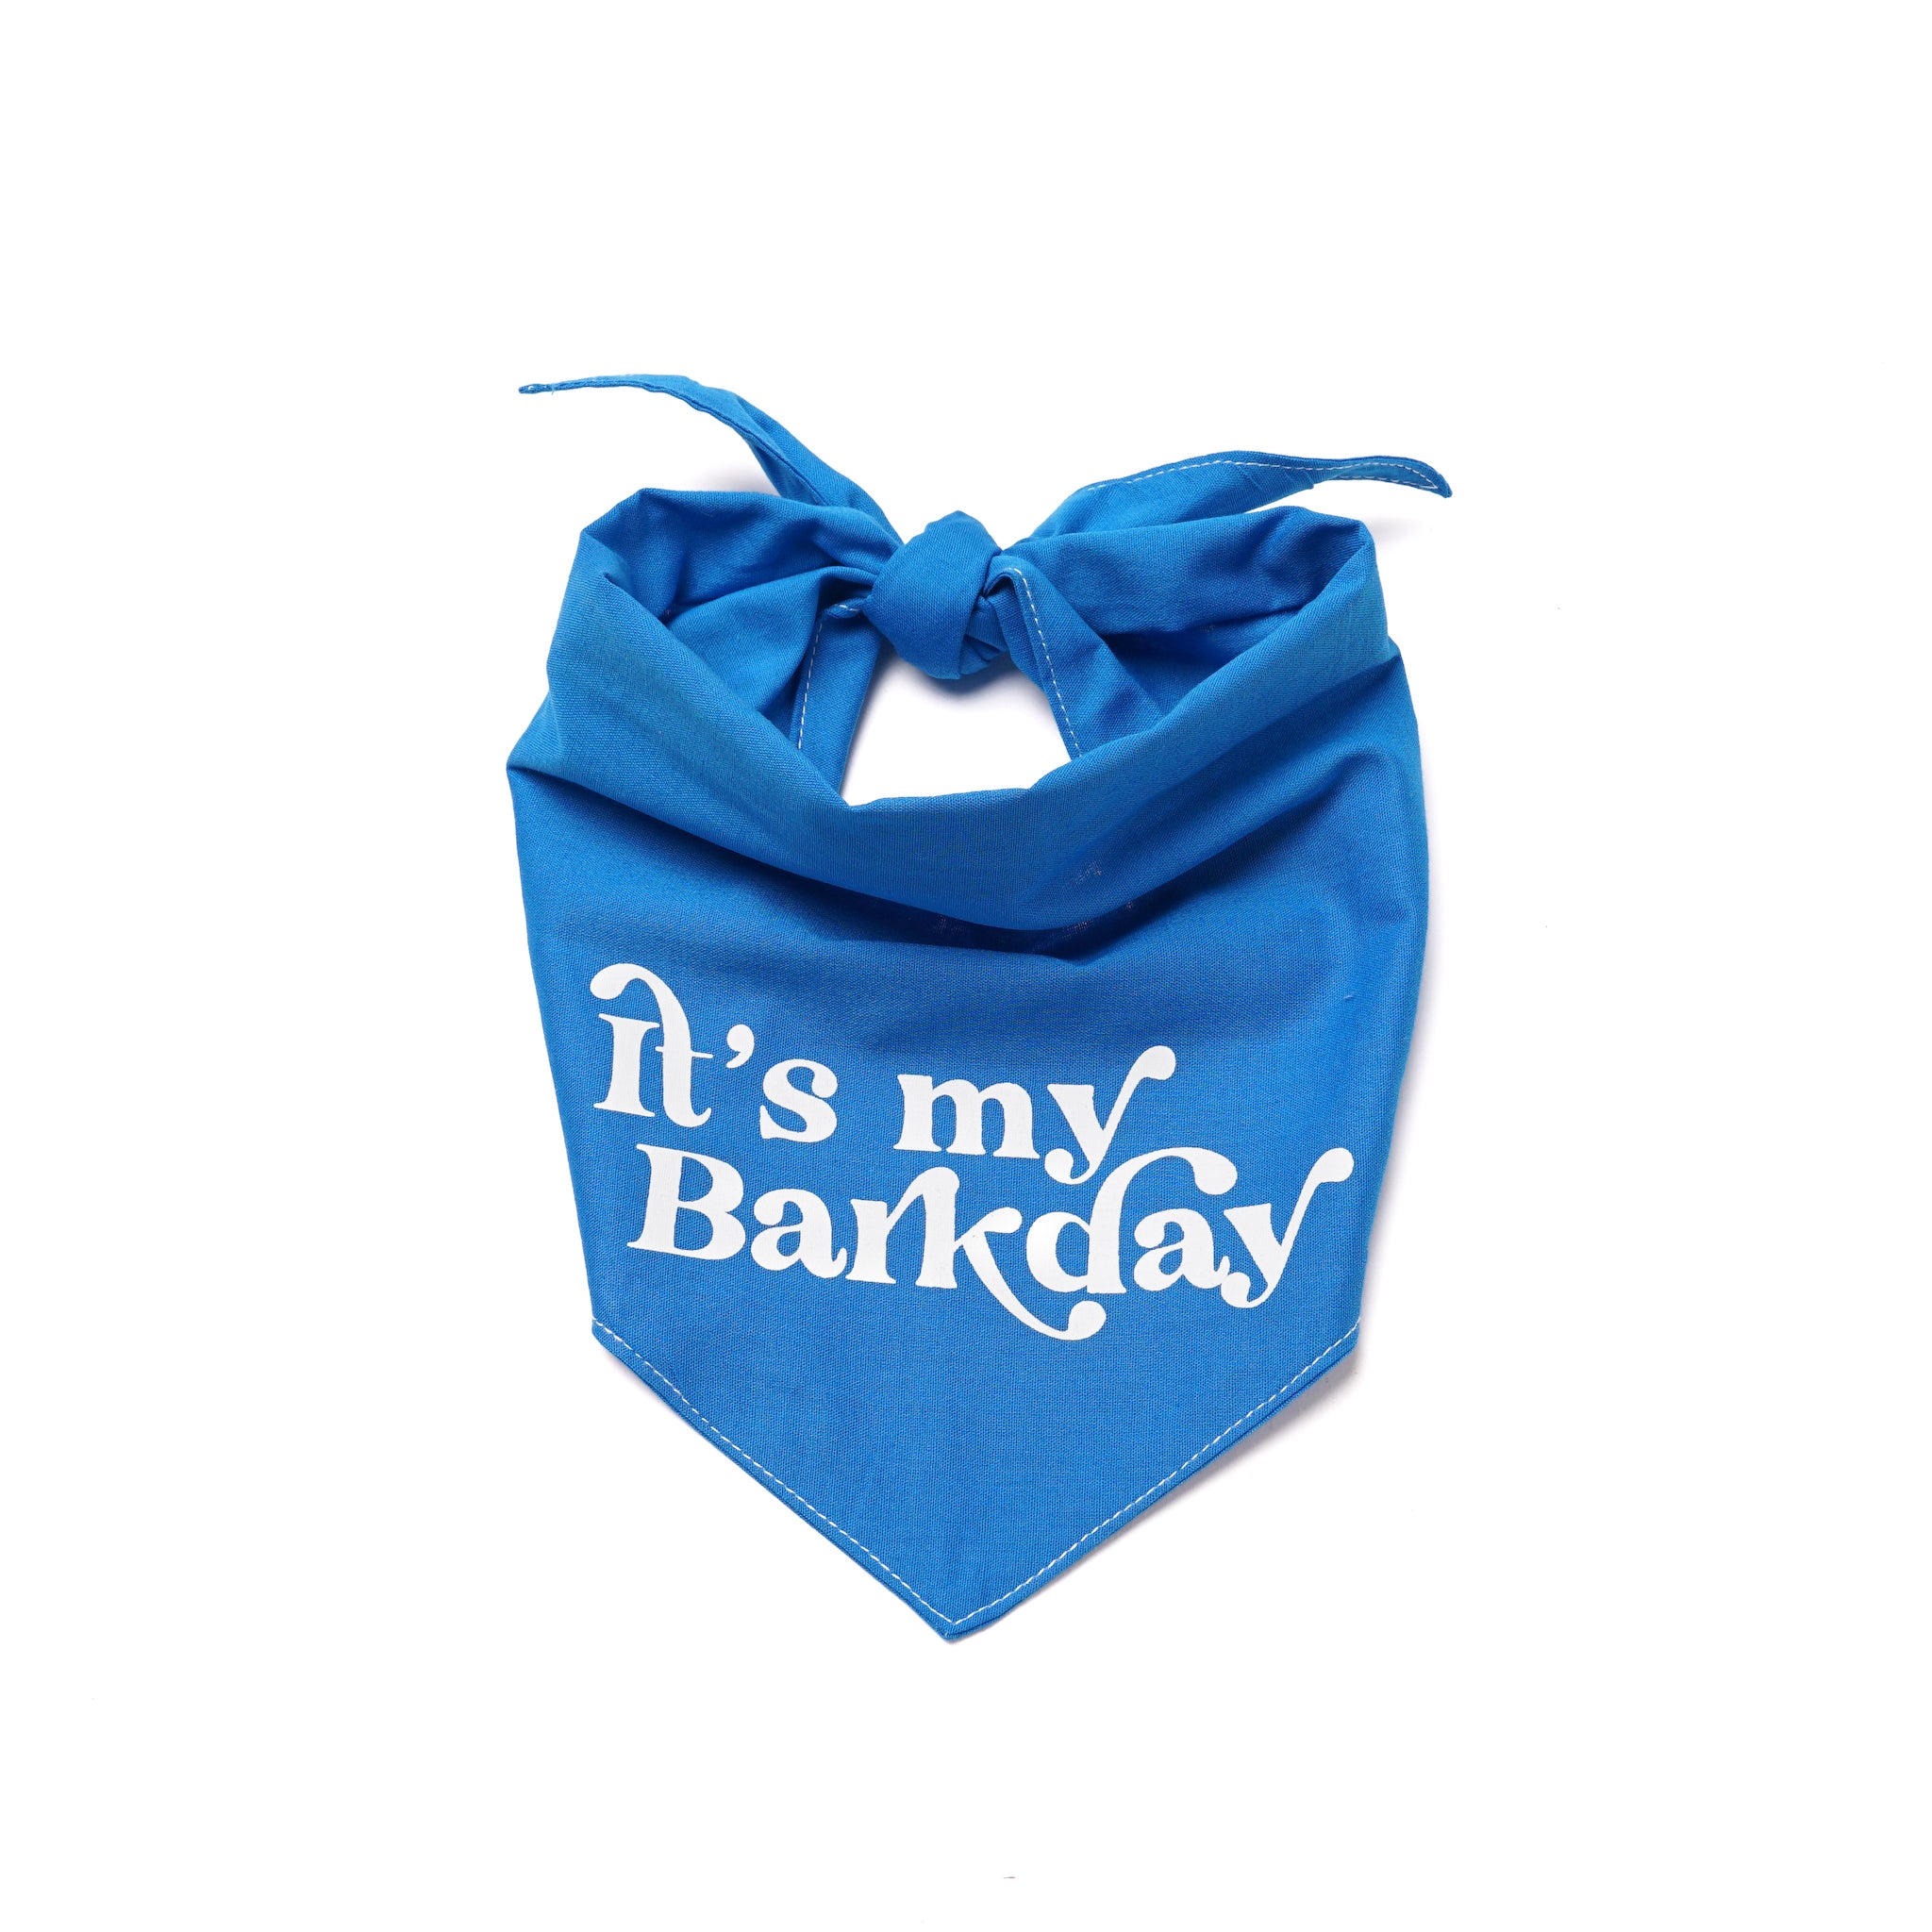 Barkday • Blue